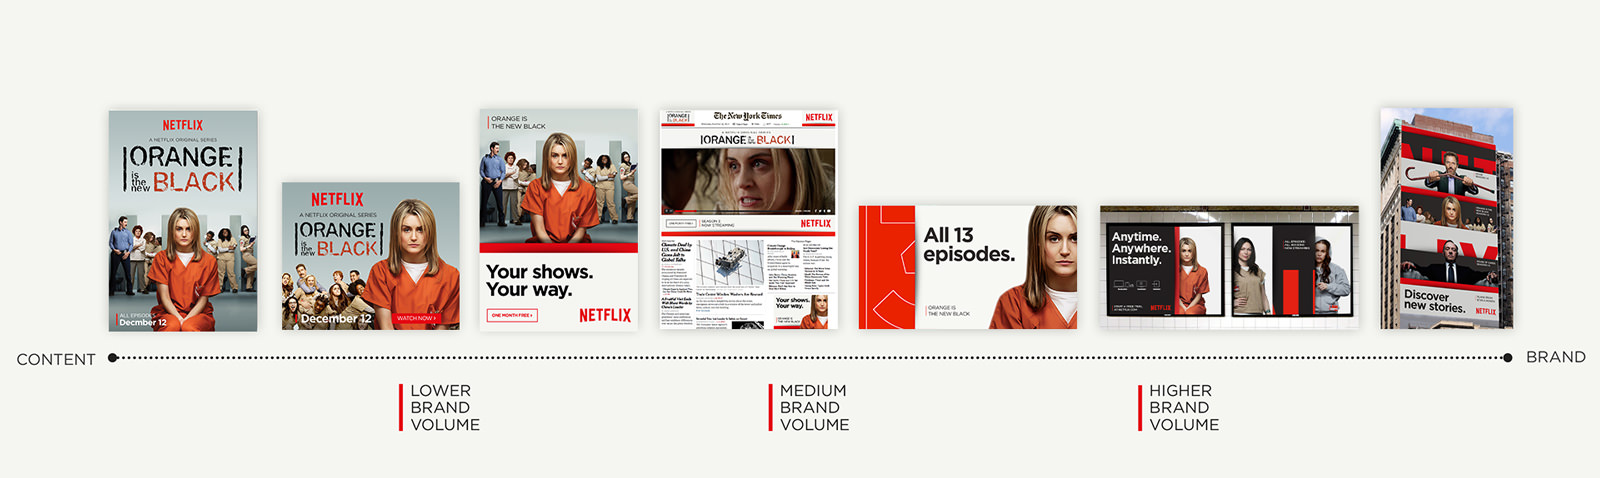 Netflix brand brand volume